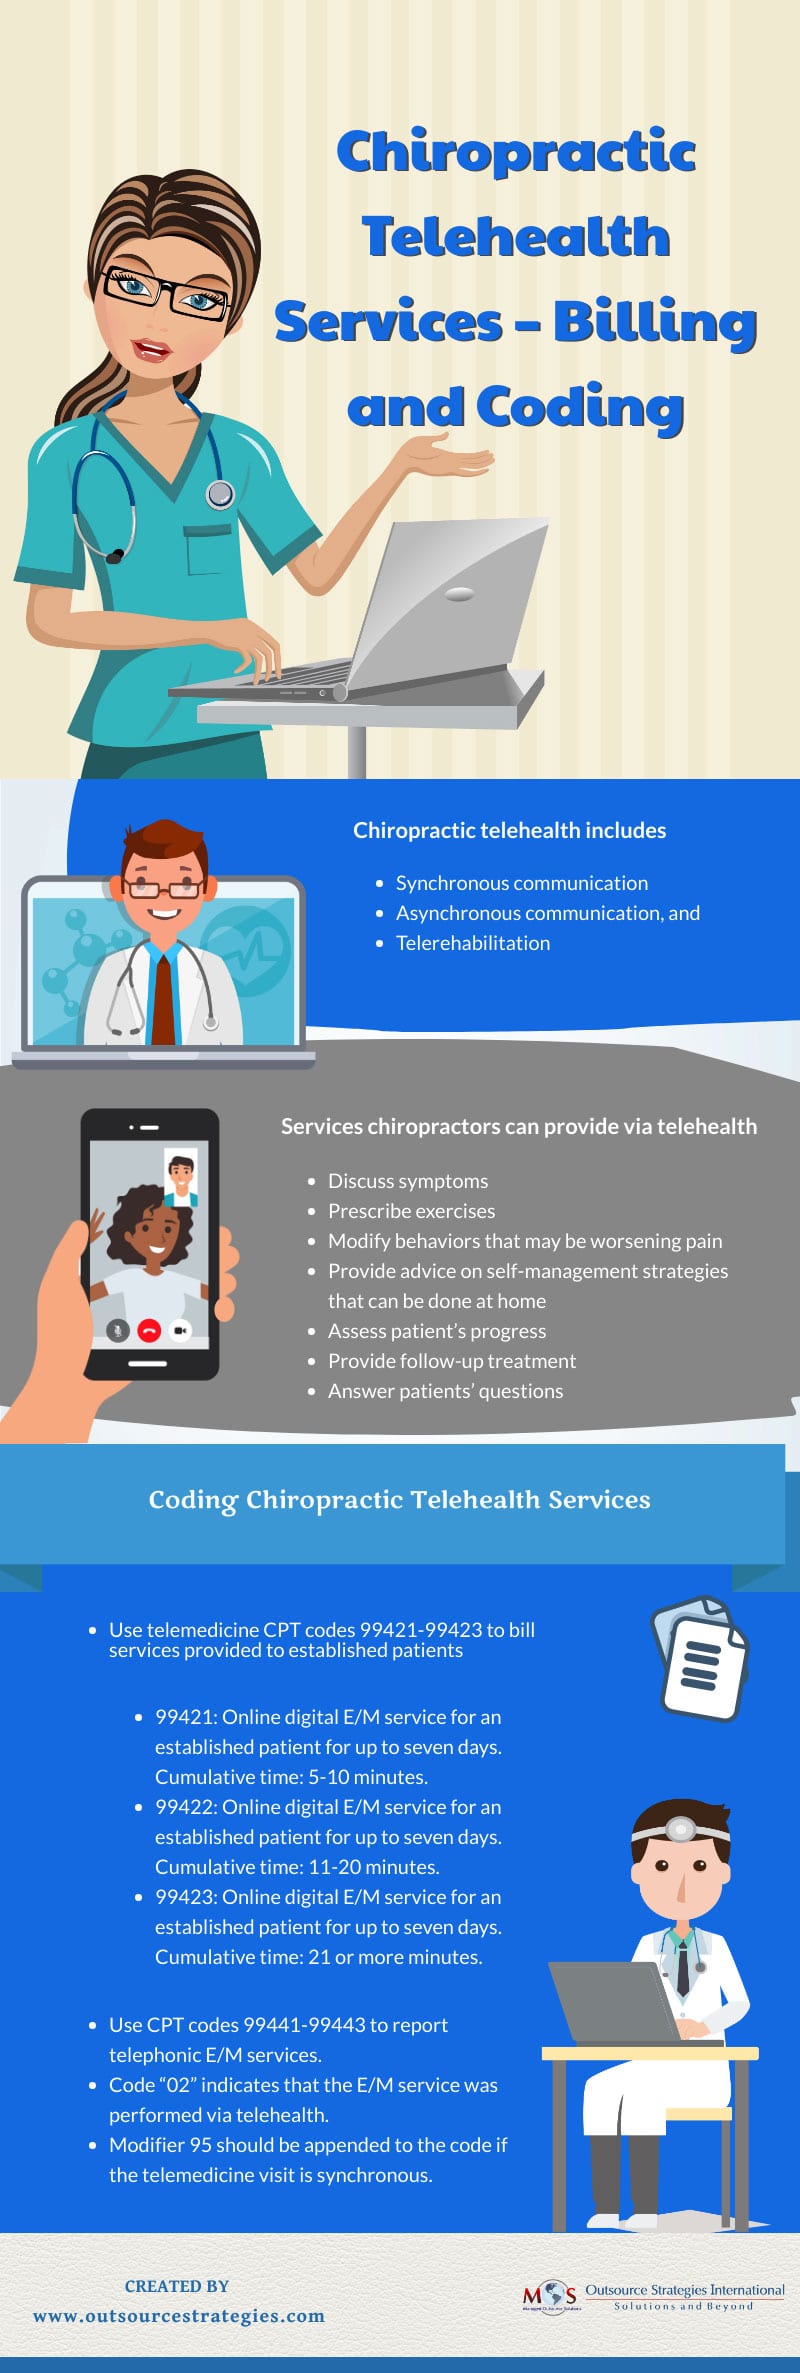 Chiropractic Telehealth Services